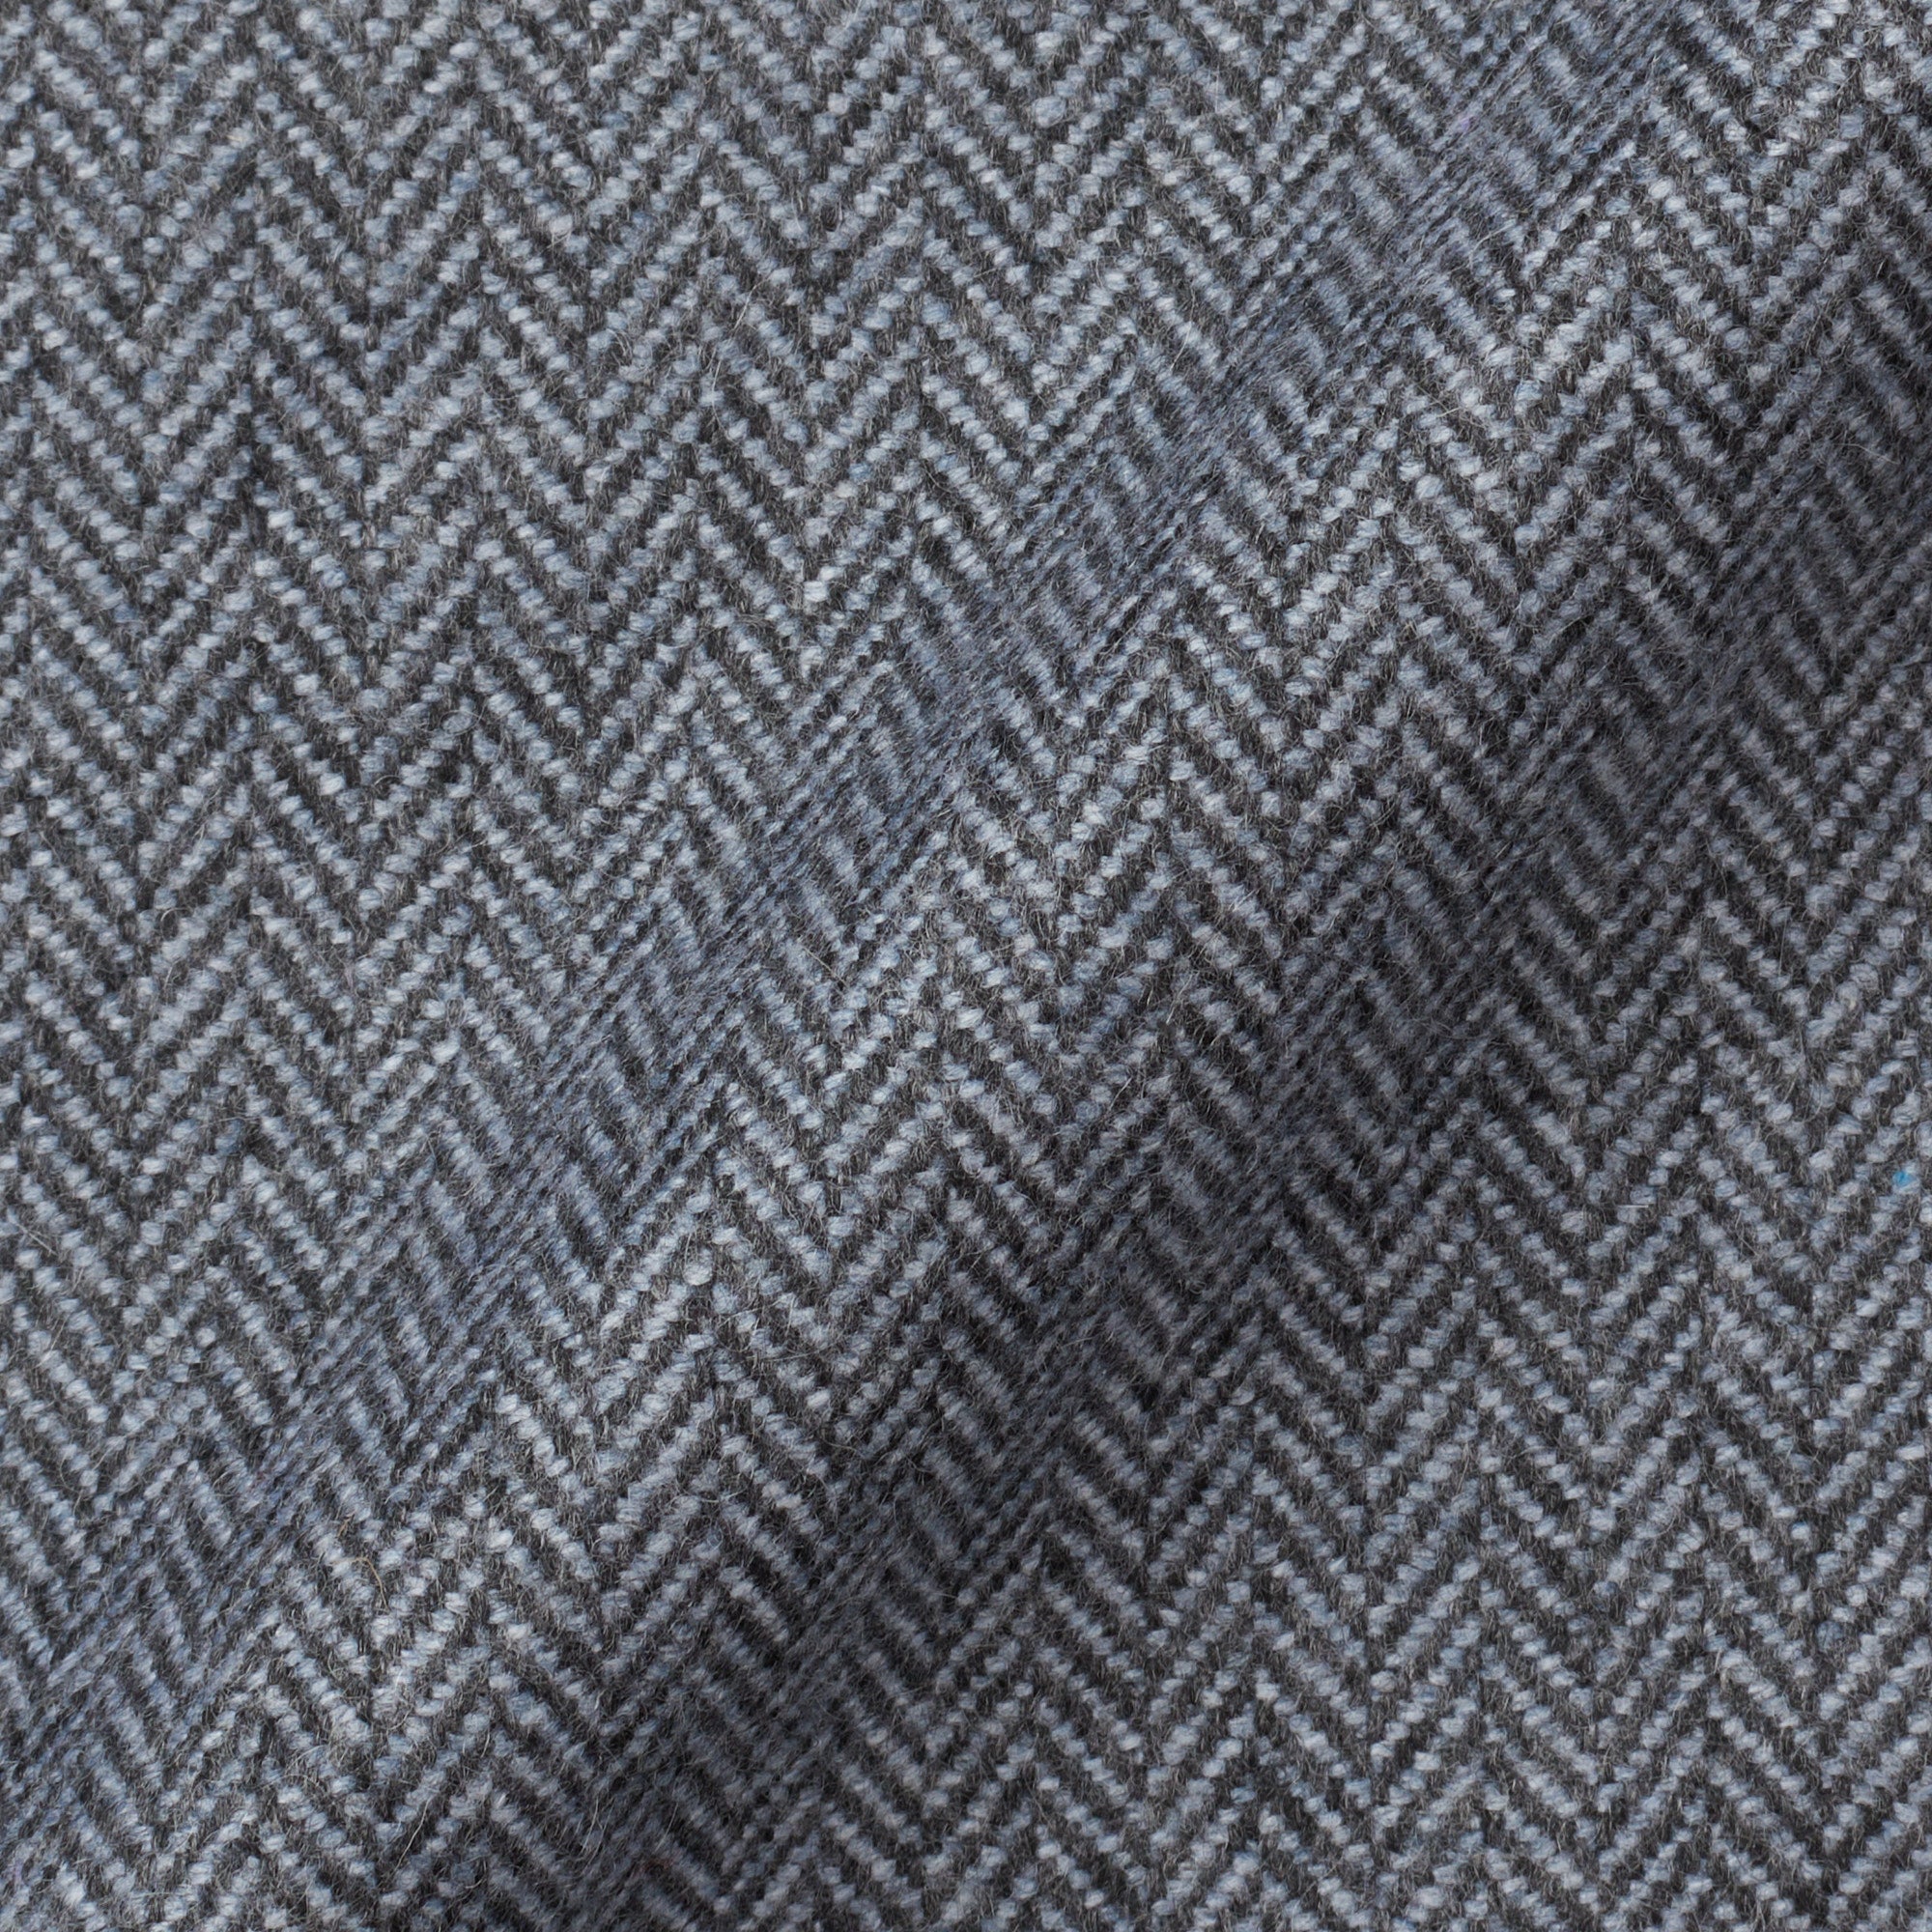 RUBINACCI LH Handmade Bespoke Gray Herringbone Cashmere Jacket EU 50 NEW US 40